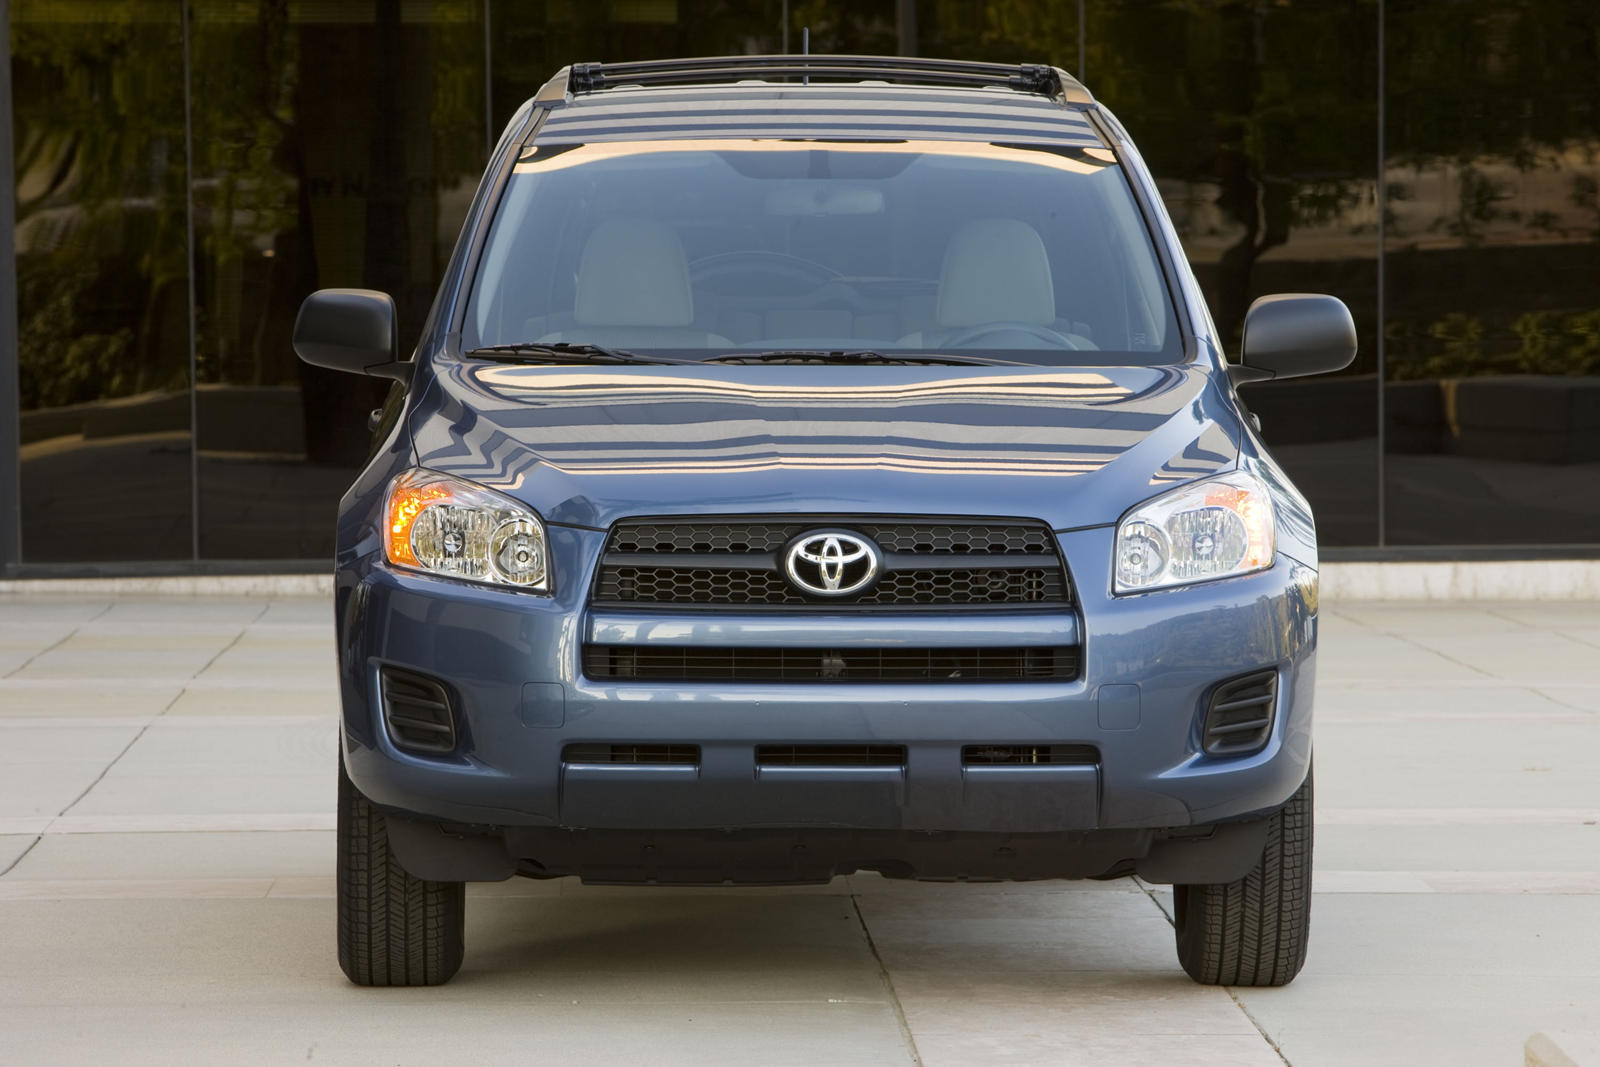 2009 Toyota RAV4 Front View